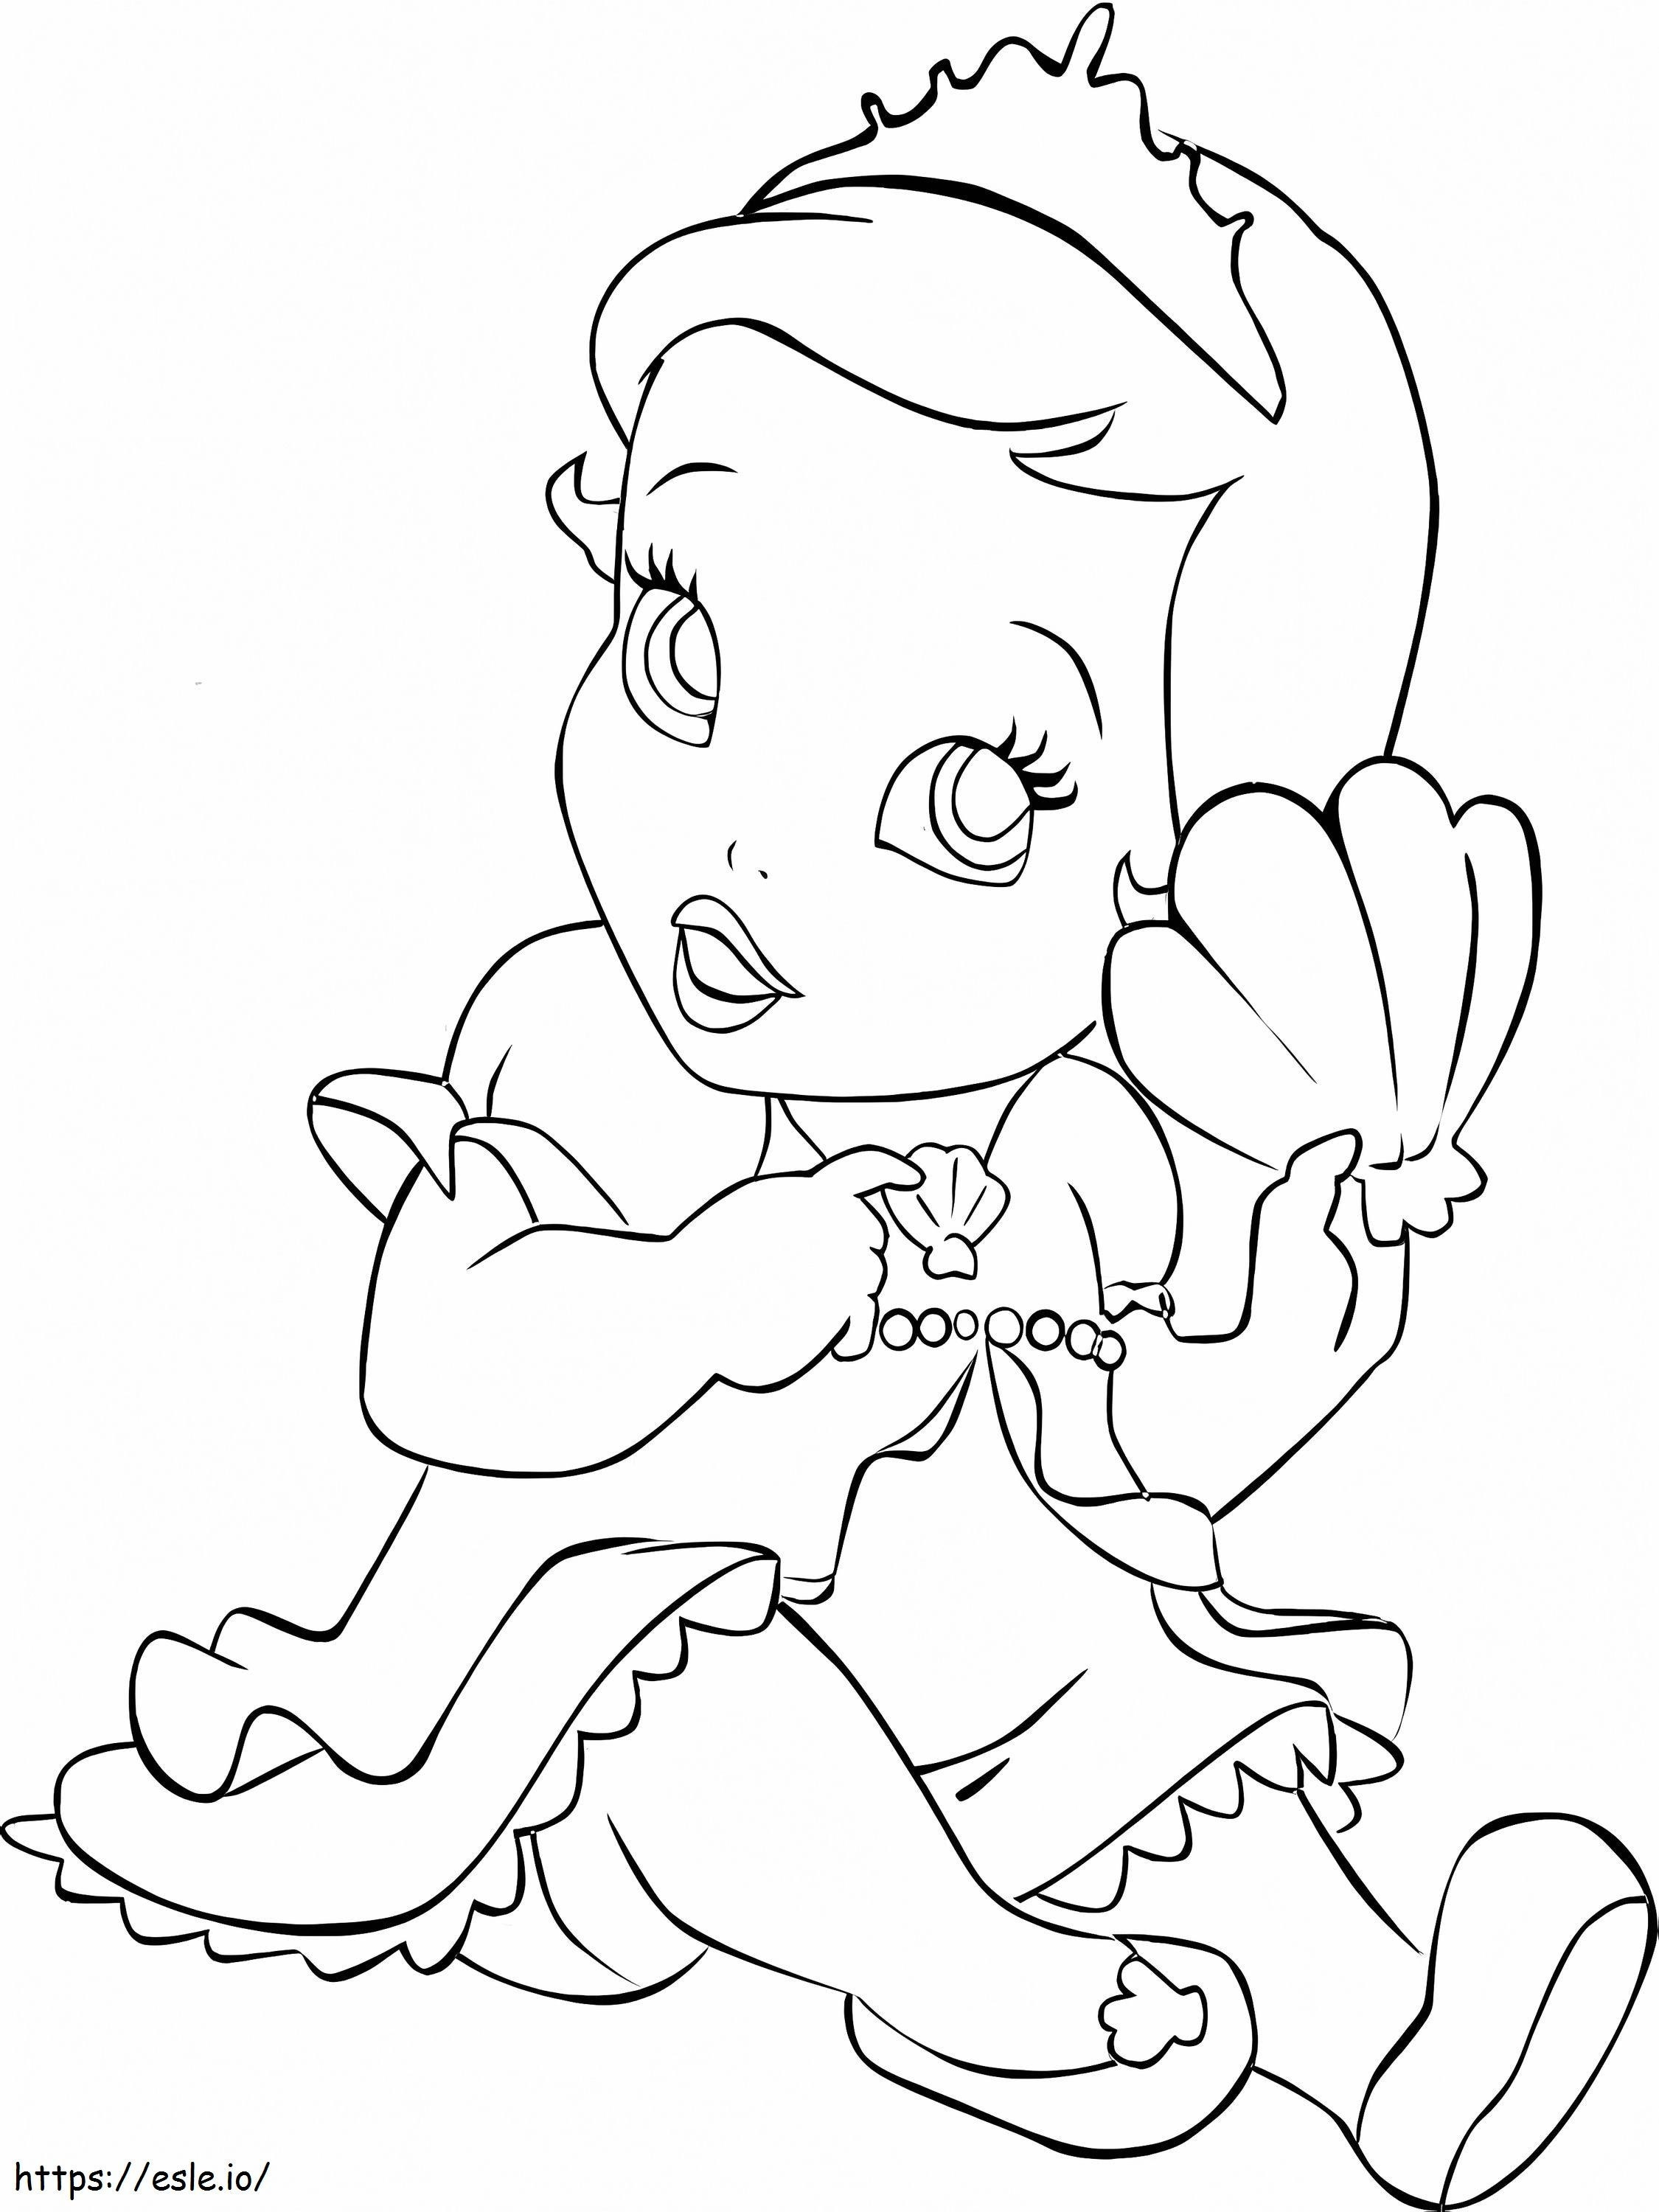 Baby Princess coloring page